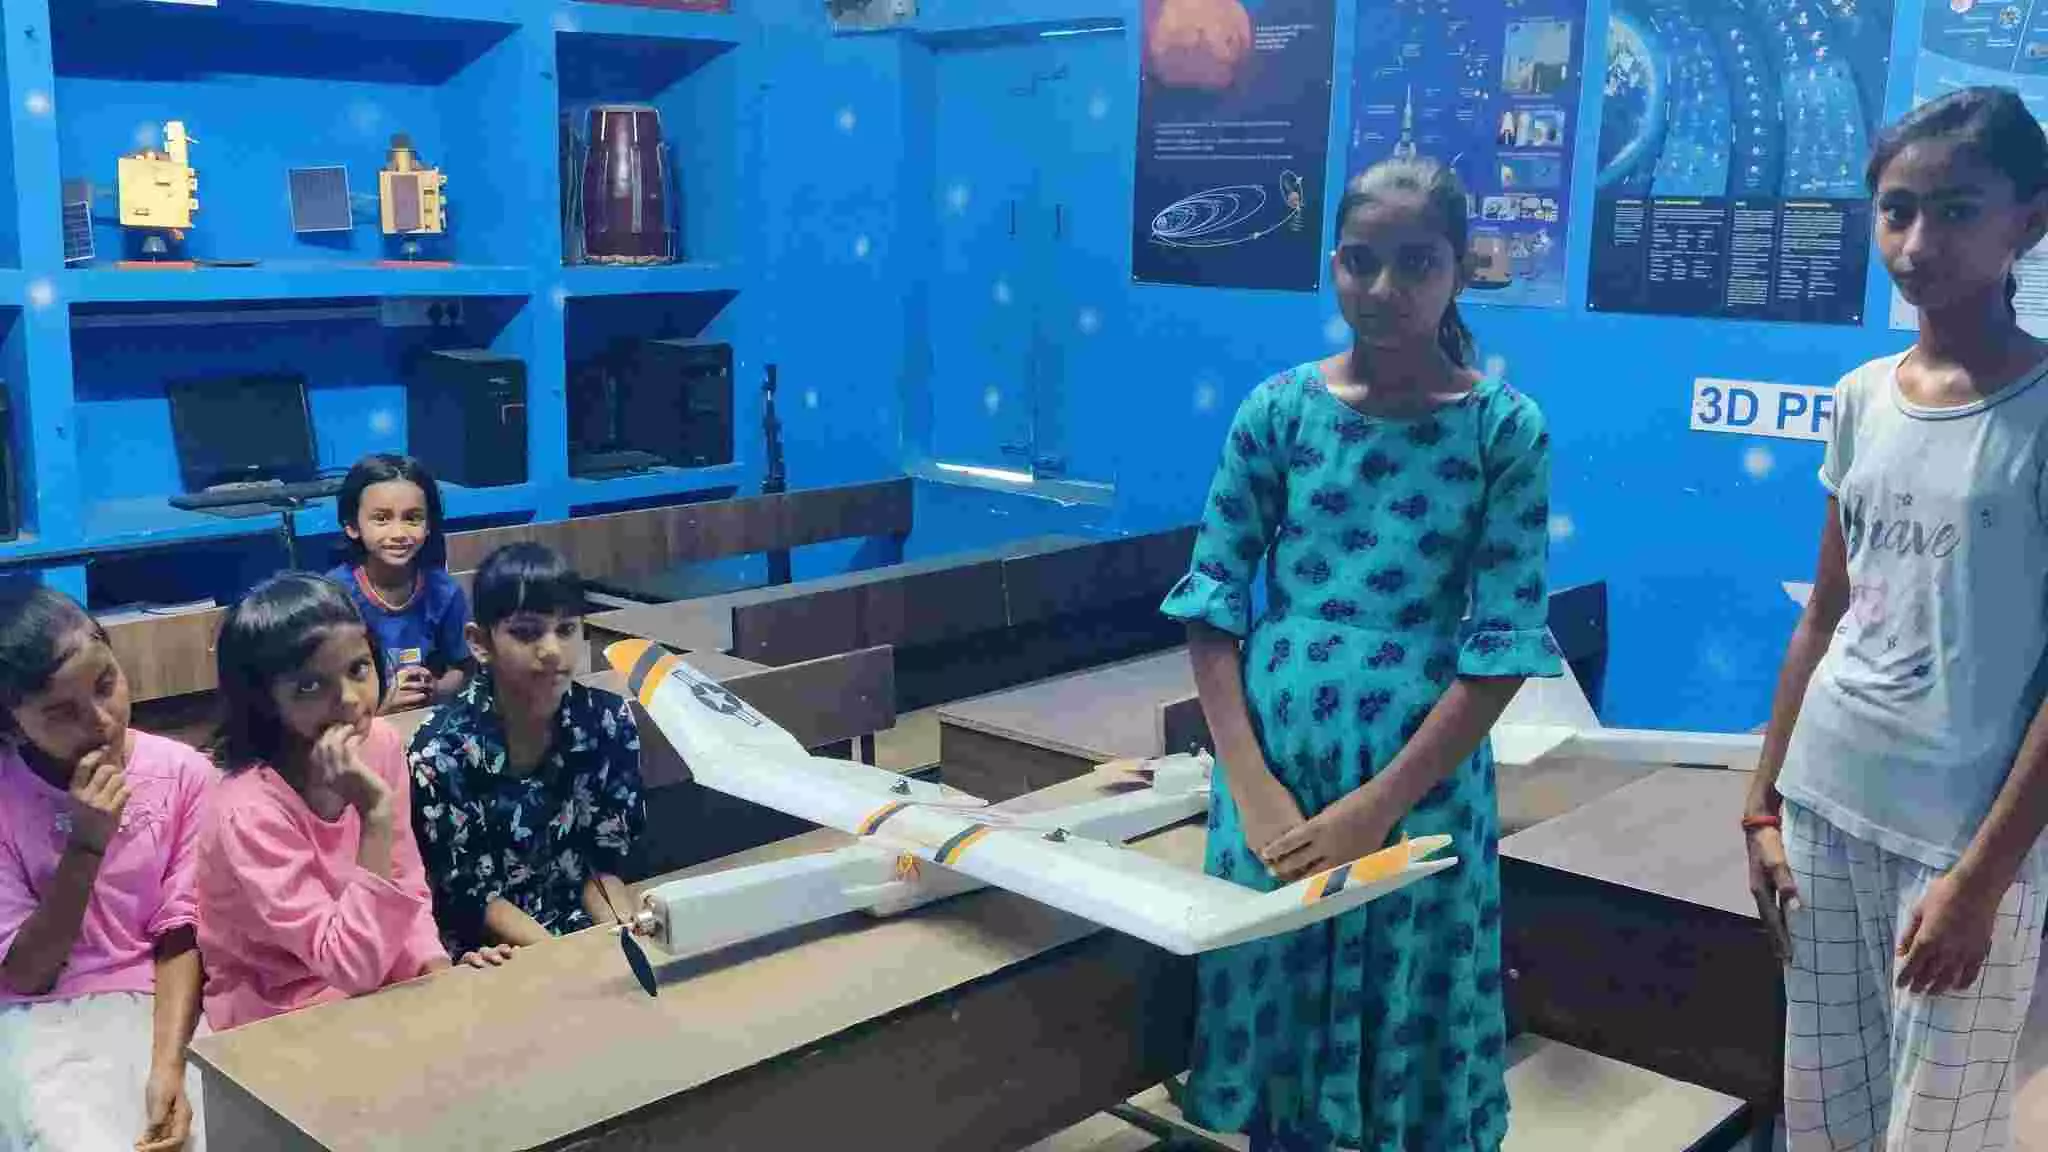 Space labs in govt schools take rocket science to village kids in U.P.